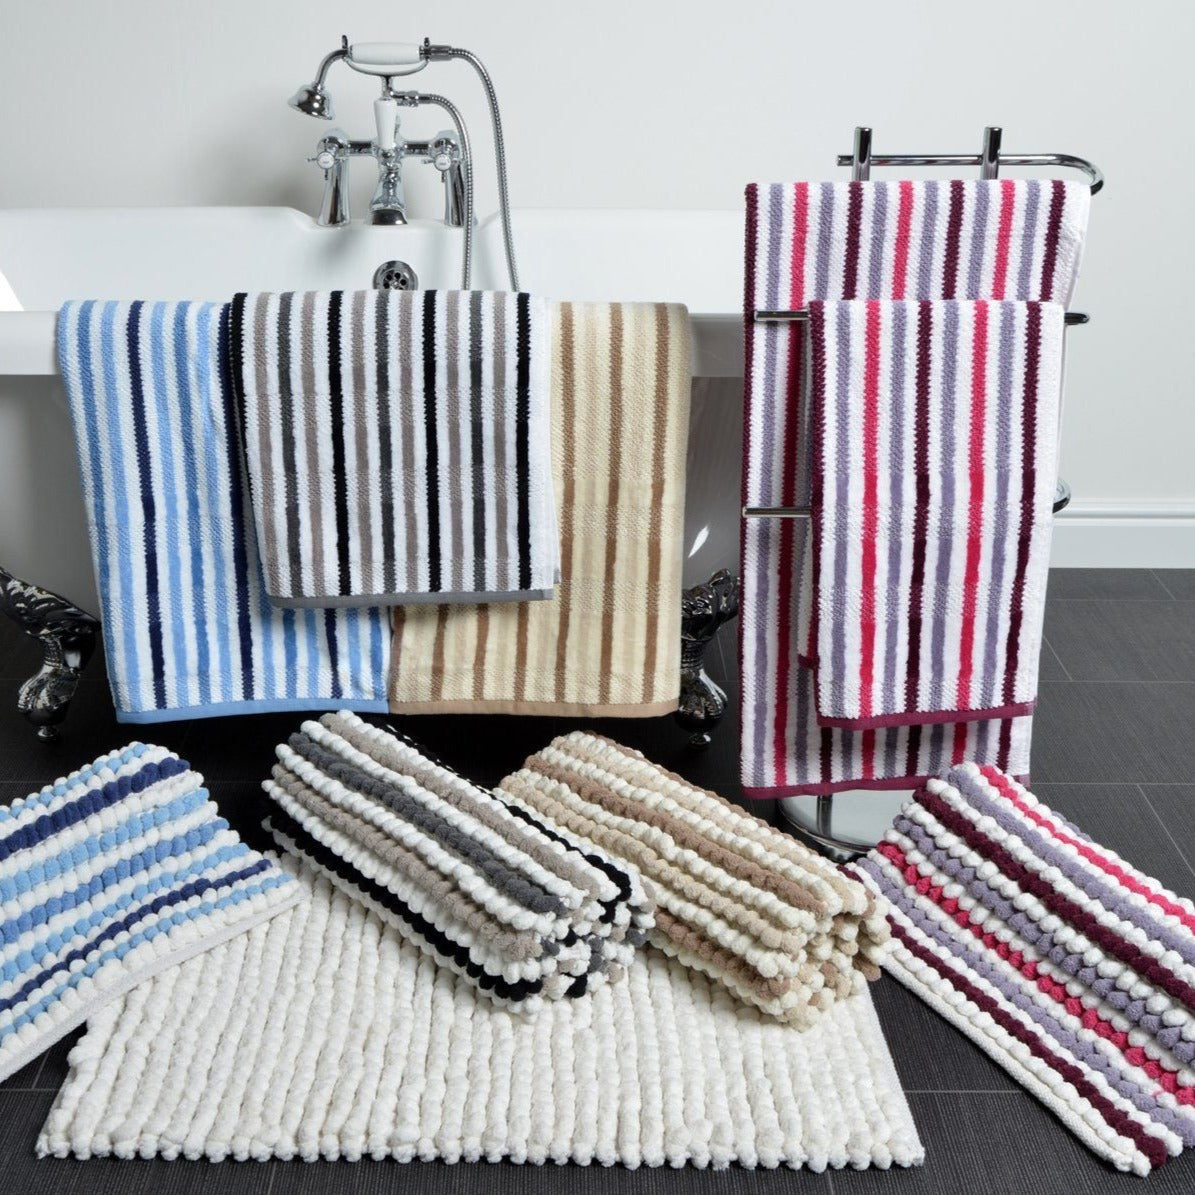 California Striped Towels - Allure Bath Fashions